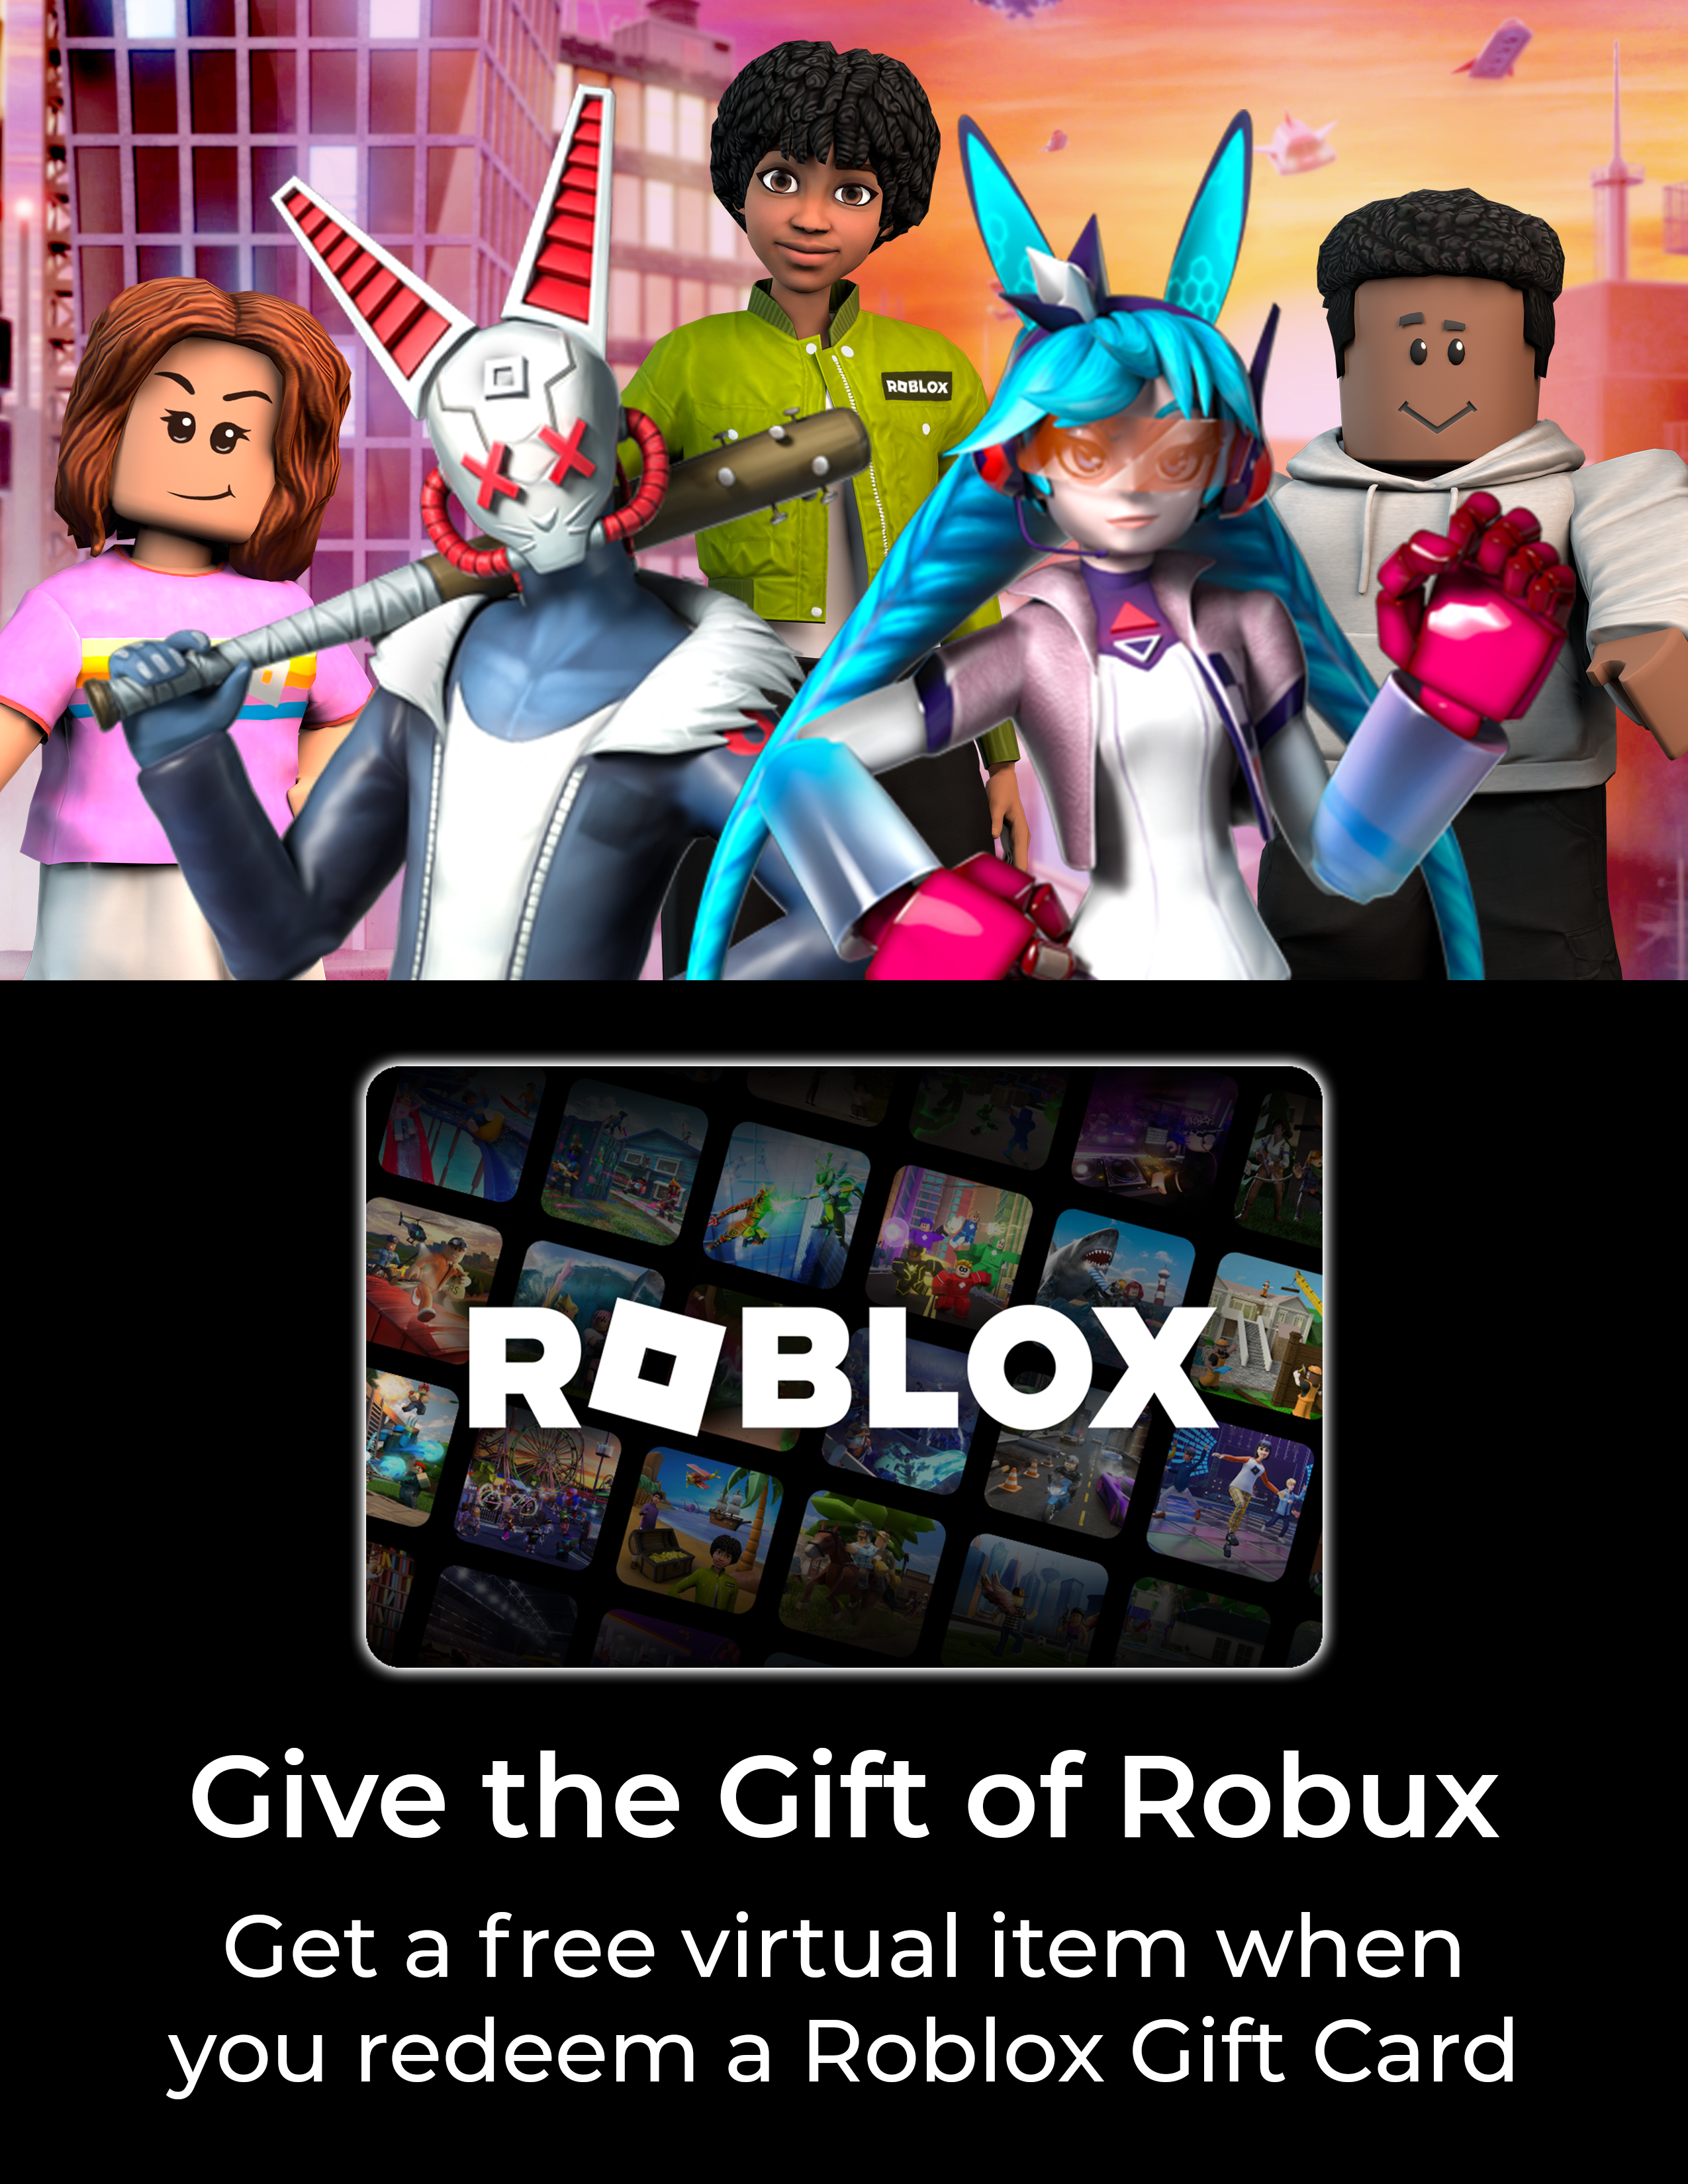 Roblox Gift Card Digital Code £10 (UK), Roblox